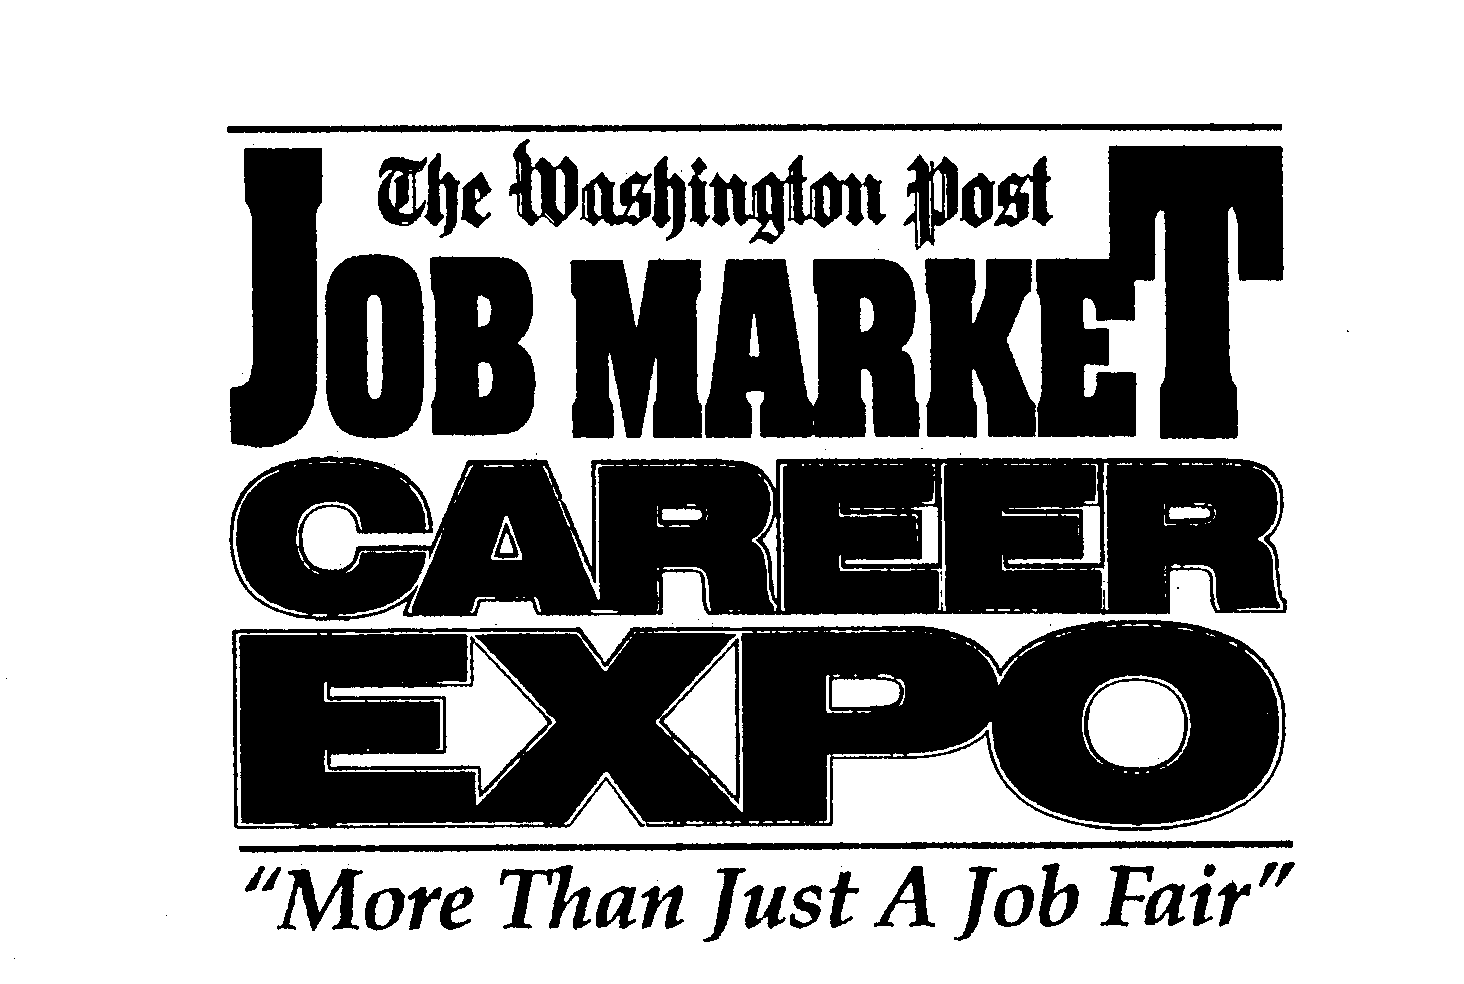  THE WASHINGTON POST JOB MARKET CAREER EXPO "MORE THAN JUST A JOB FAIR"